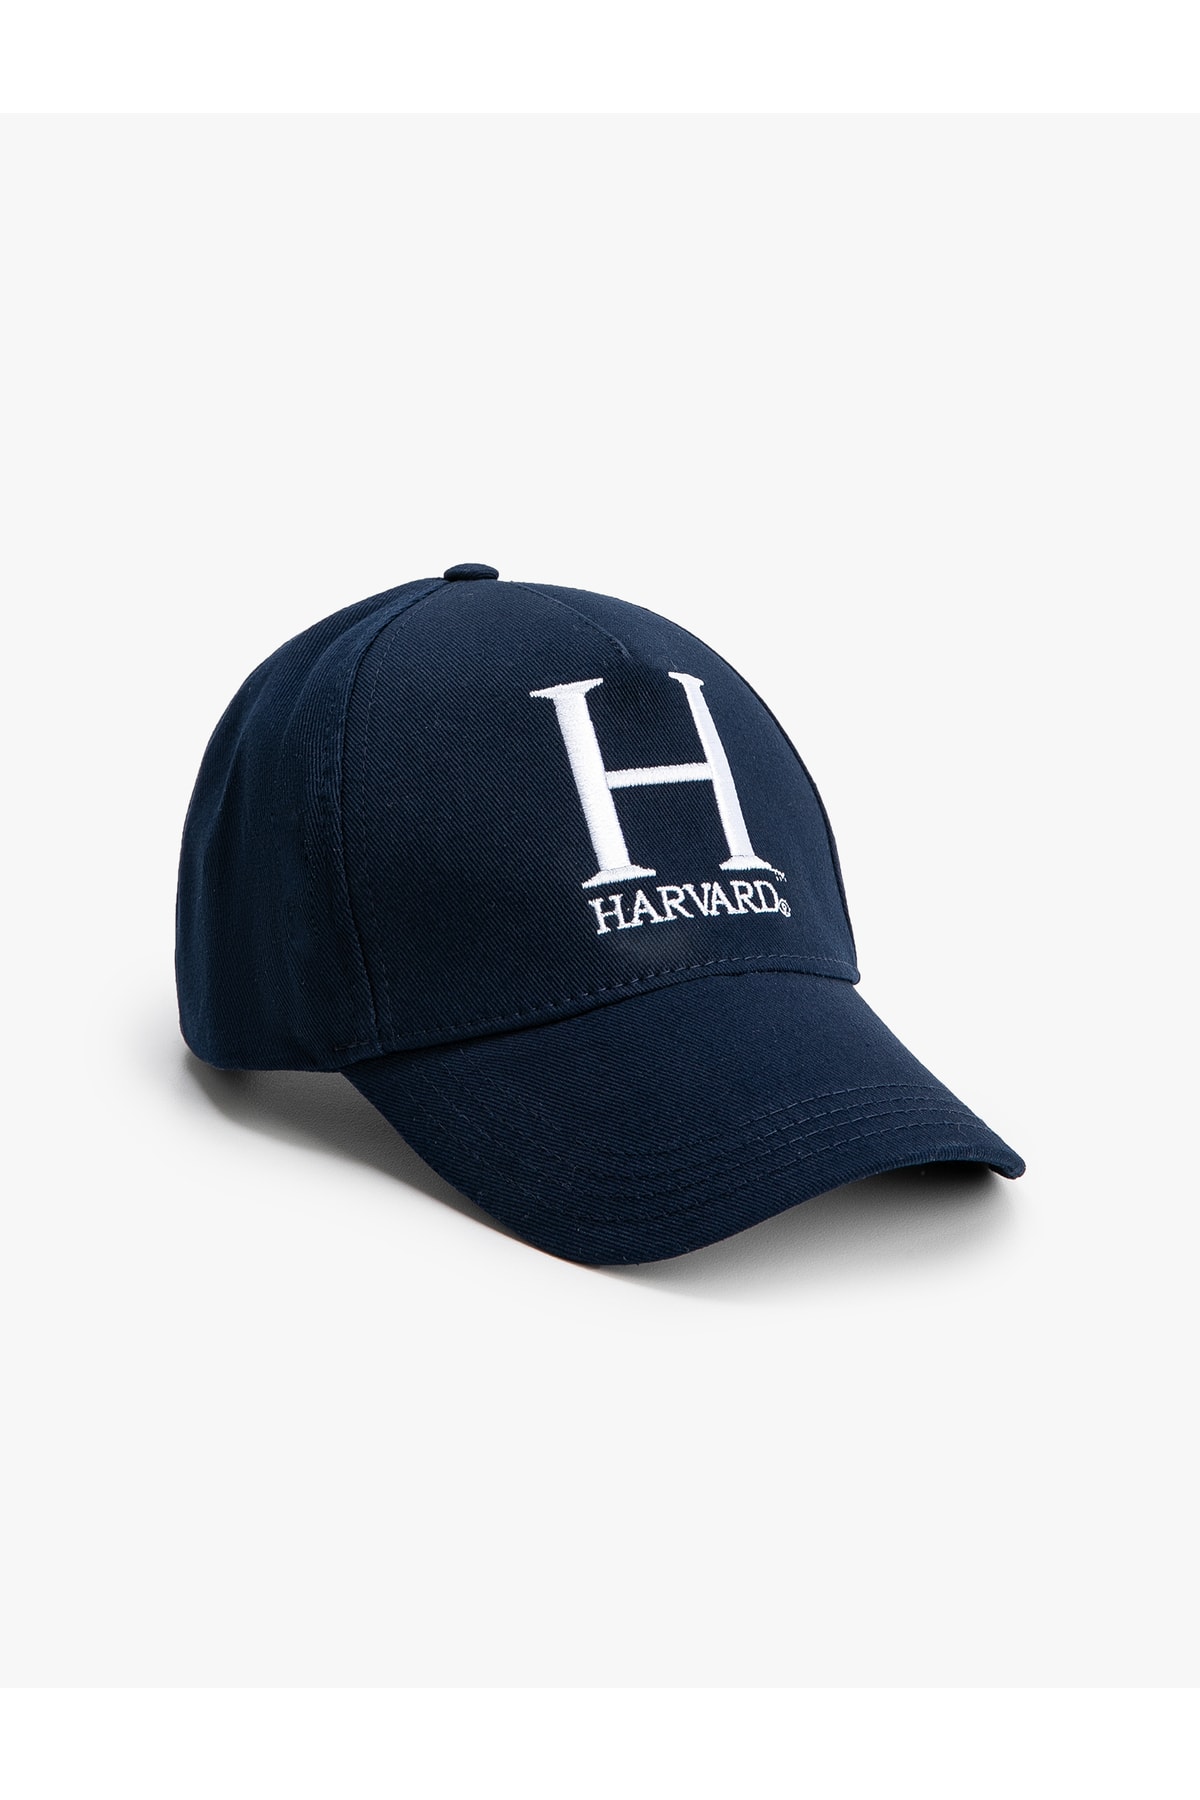 Koton Cap Hat Harvard Embroidered Licensed Cotton